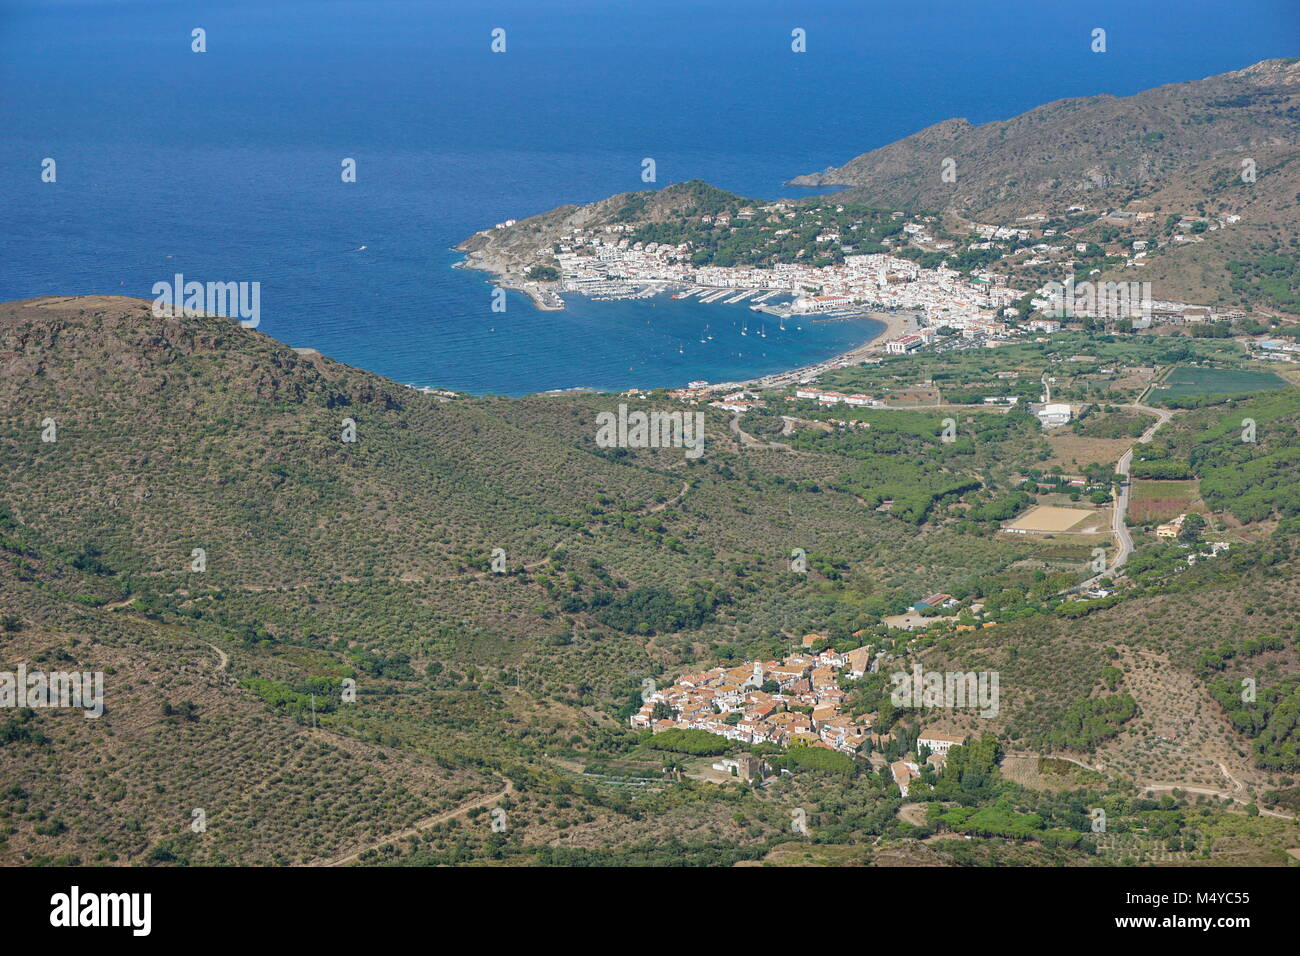 Luftaufnahme Spanien Costa Brava die Stadt El Port de la Selva und das Dorf La Selva de Mar, Katalonien, Alt Emporda, Girona, Mittelmeer Stockfoto